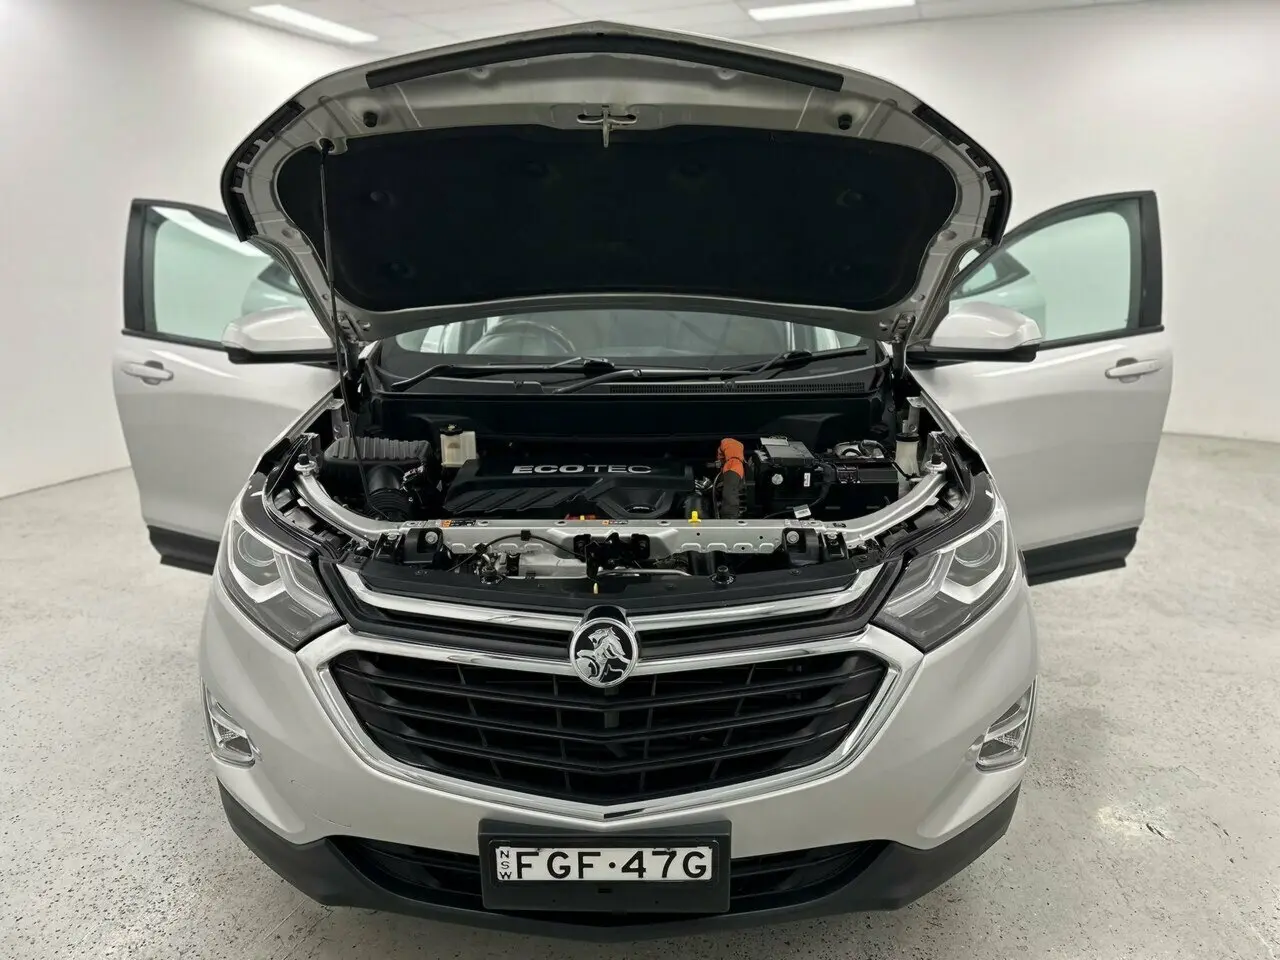 2019 Holden Equinox Image 10